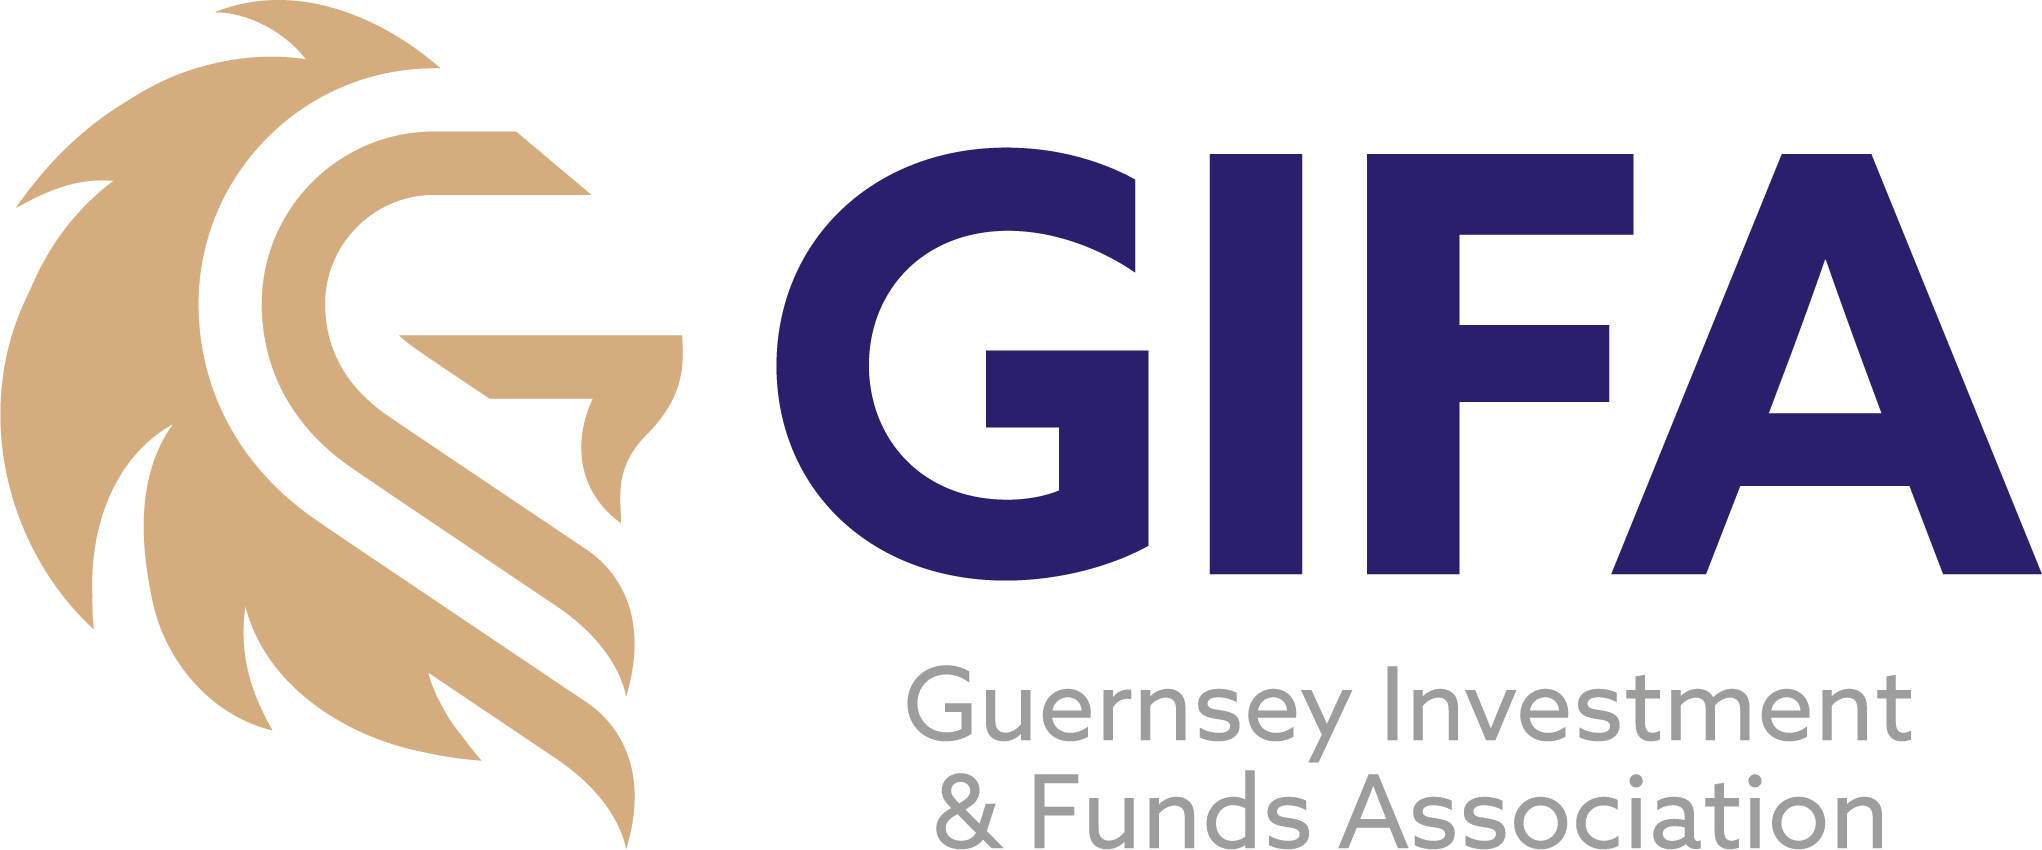 Guernsey Investment & Funds Association